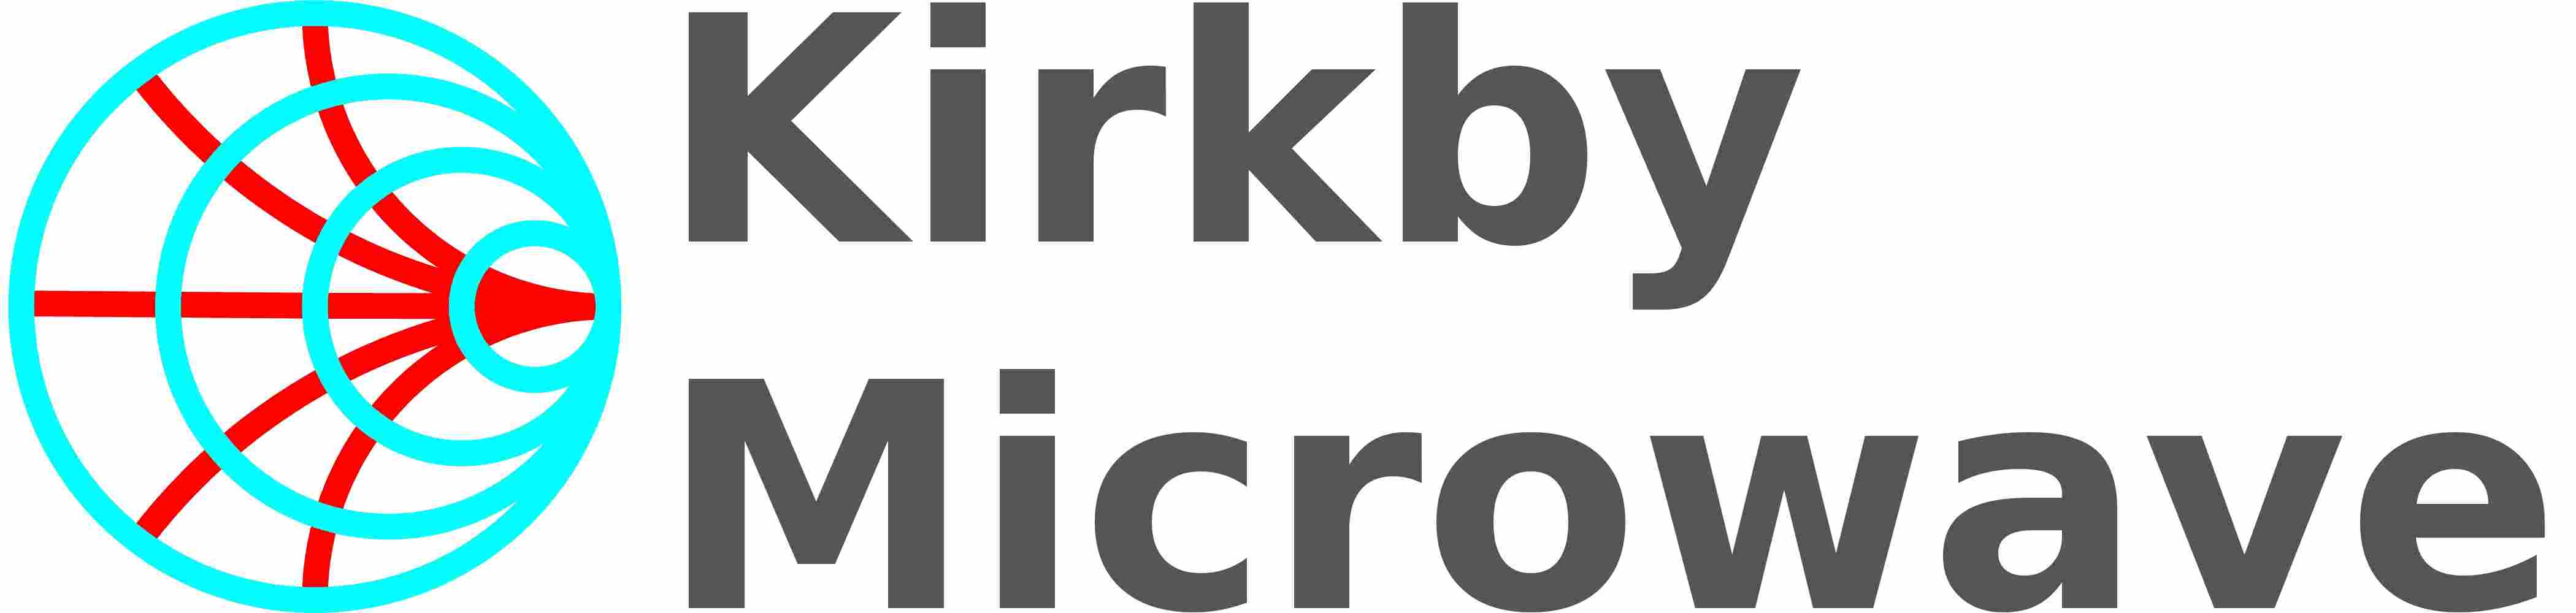 Kirkby Microwave Logo